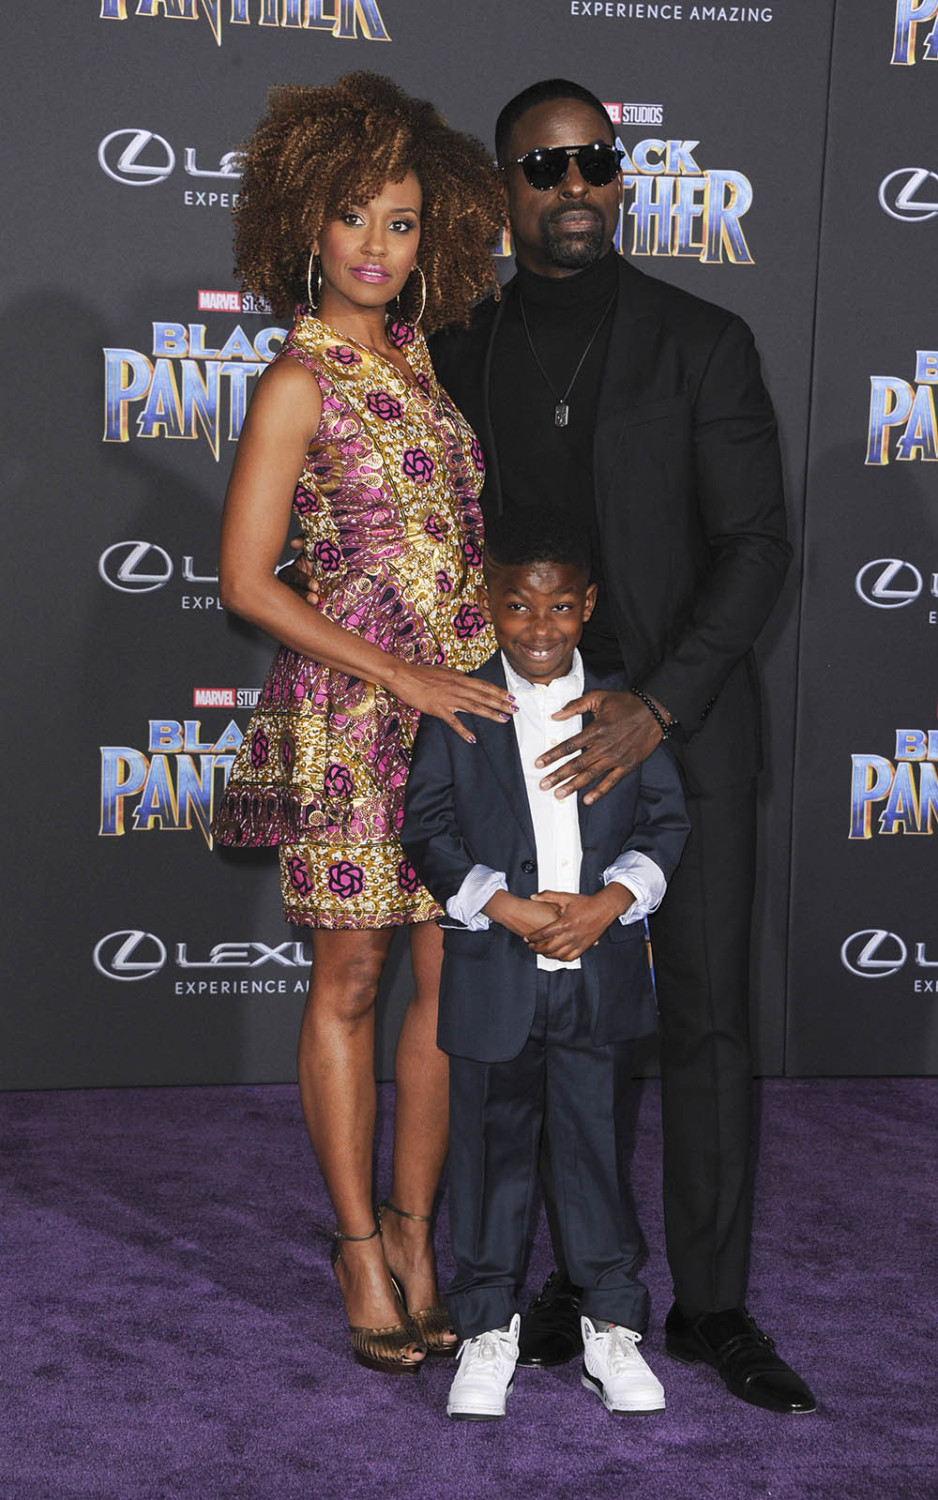 Sterling K. Brown & family at Film Premiere of Black Panther | Sandra Rose